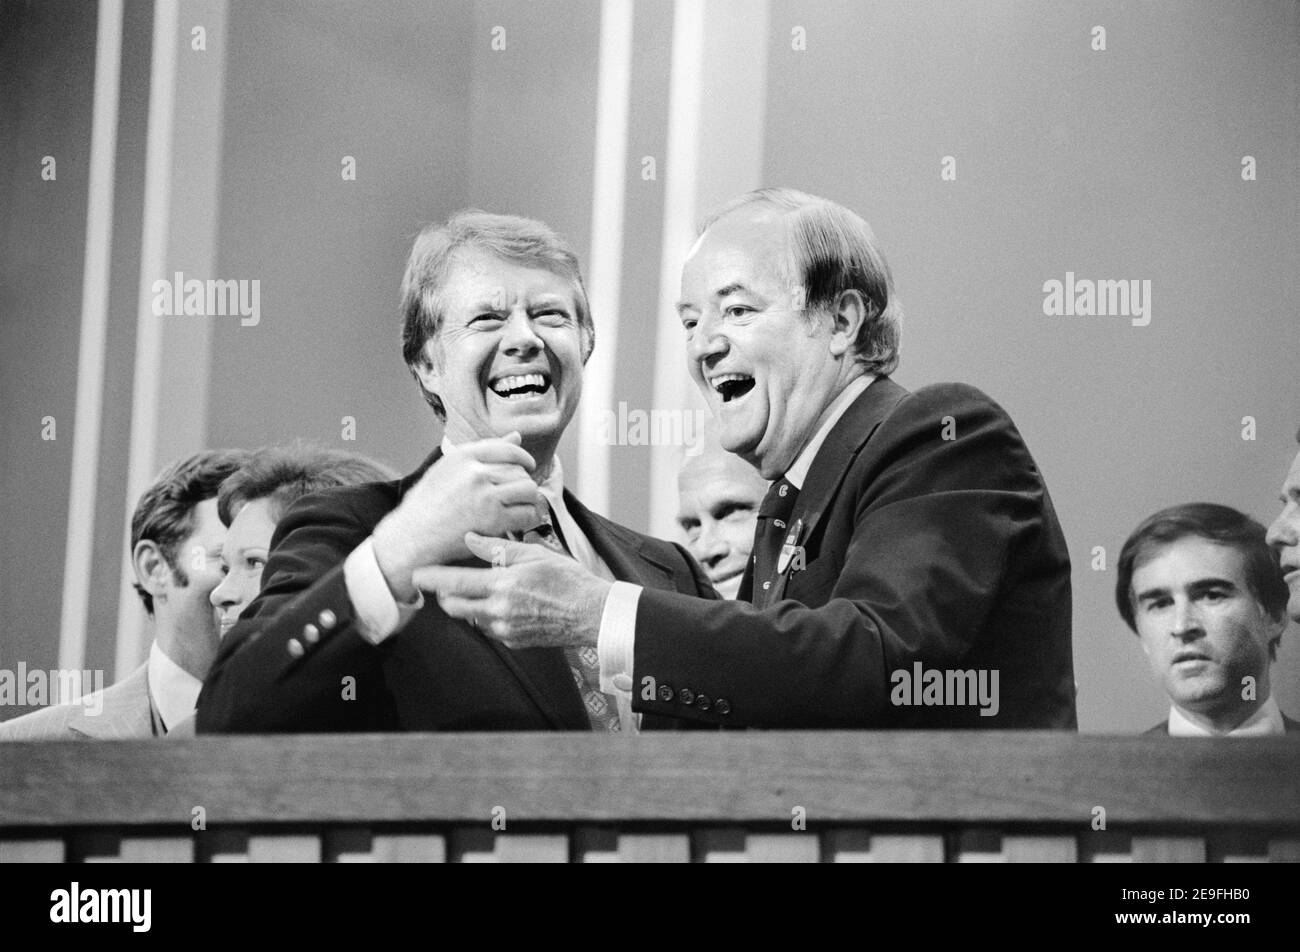 Jimmy Carter and Hubert Humphrey at Democratic National Convention, New York City, New York, USA, Warren K. Leffler, July 15, 1976 Stock Photo